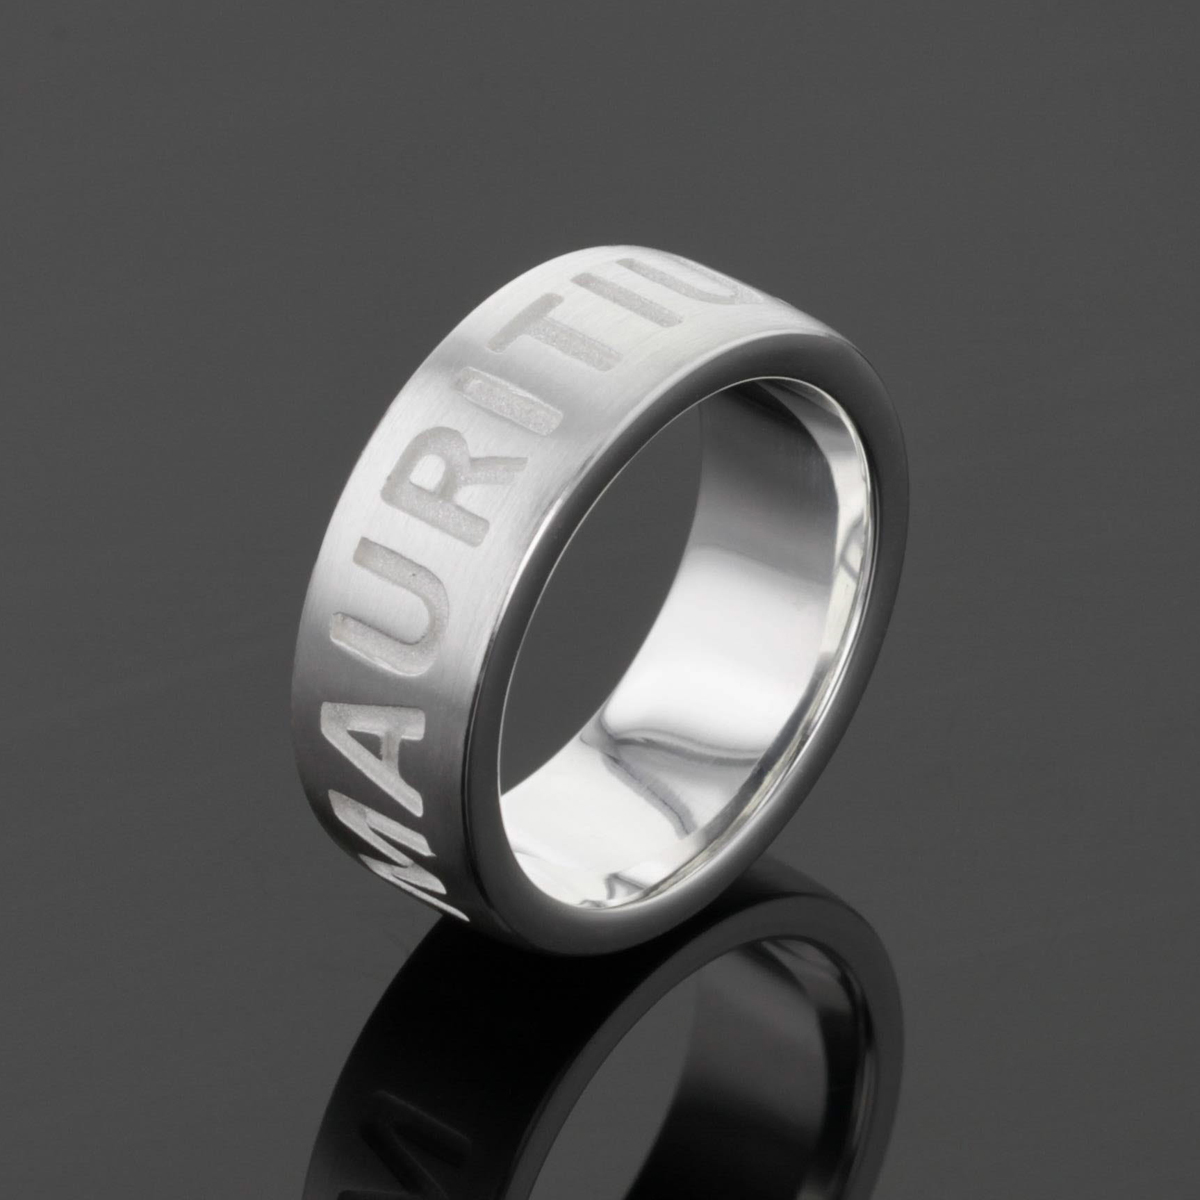 Silver Mauritius souvenir ring